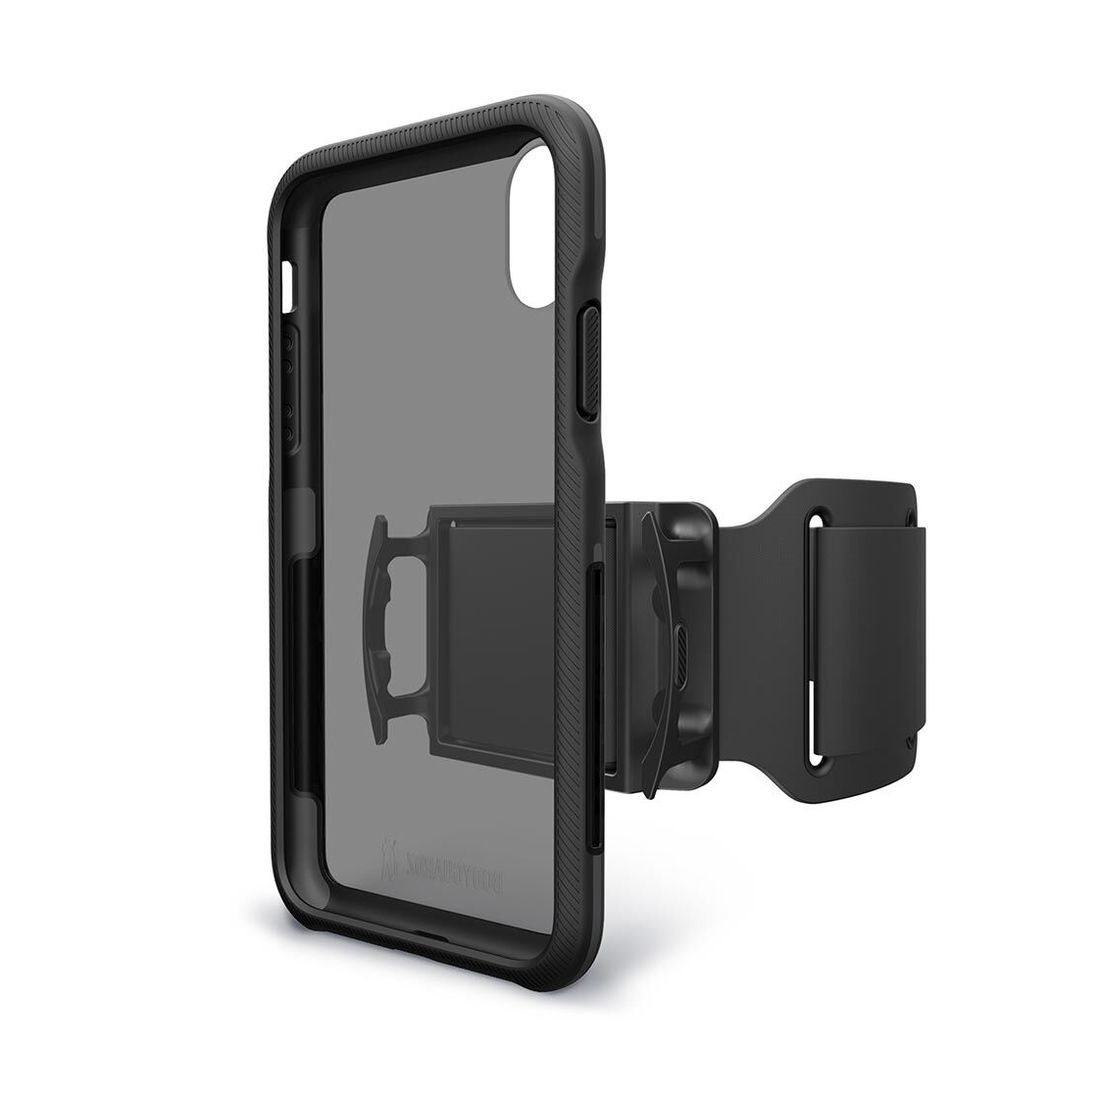 BodyGuardz Trainr Pro Case Black/Grey for iPhone XS with Armband